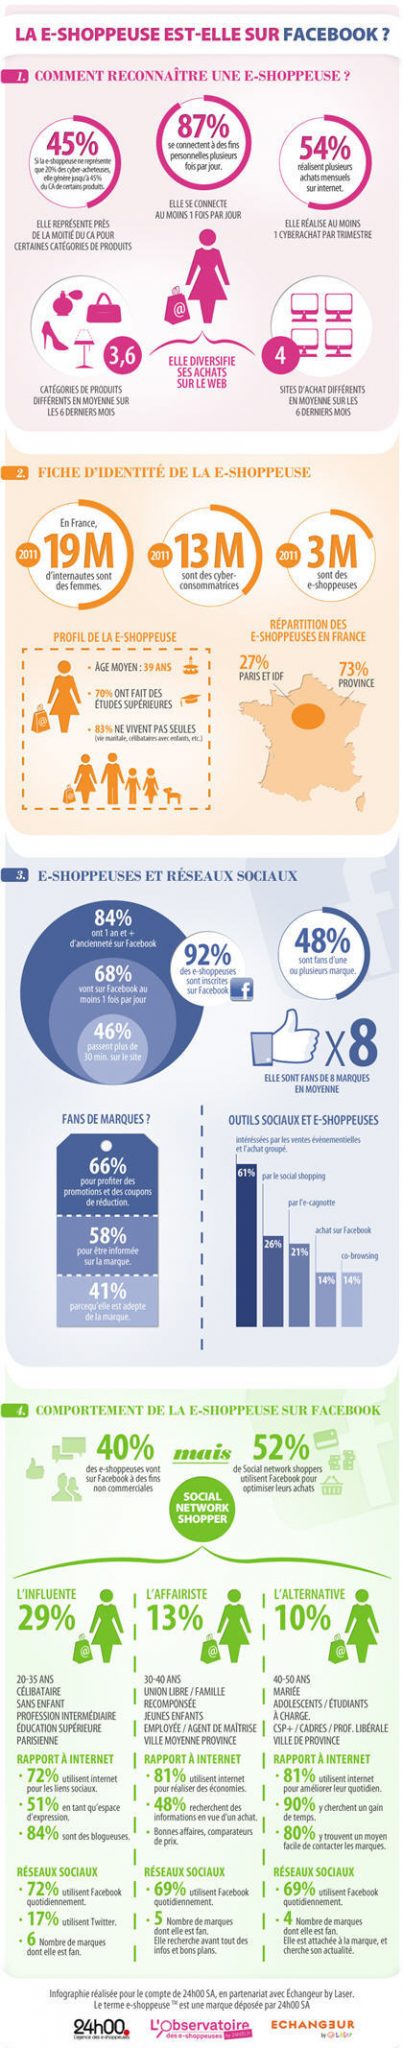 infographie e-shoppeuse en France